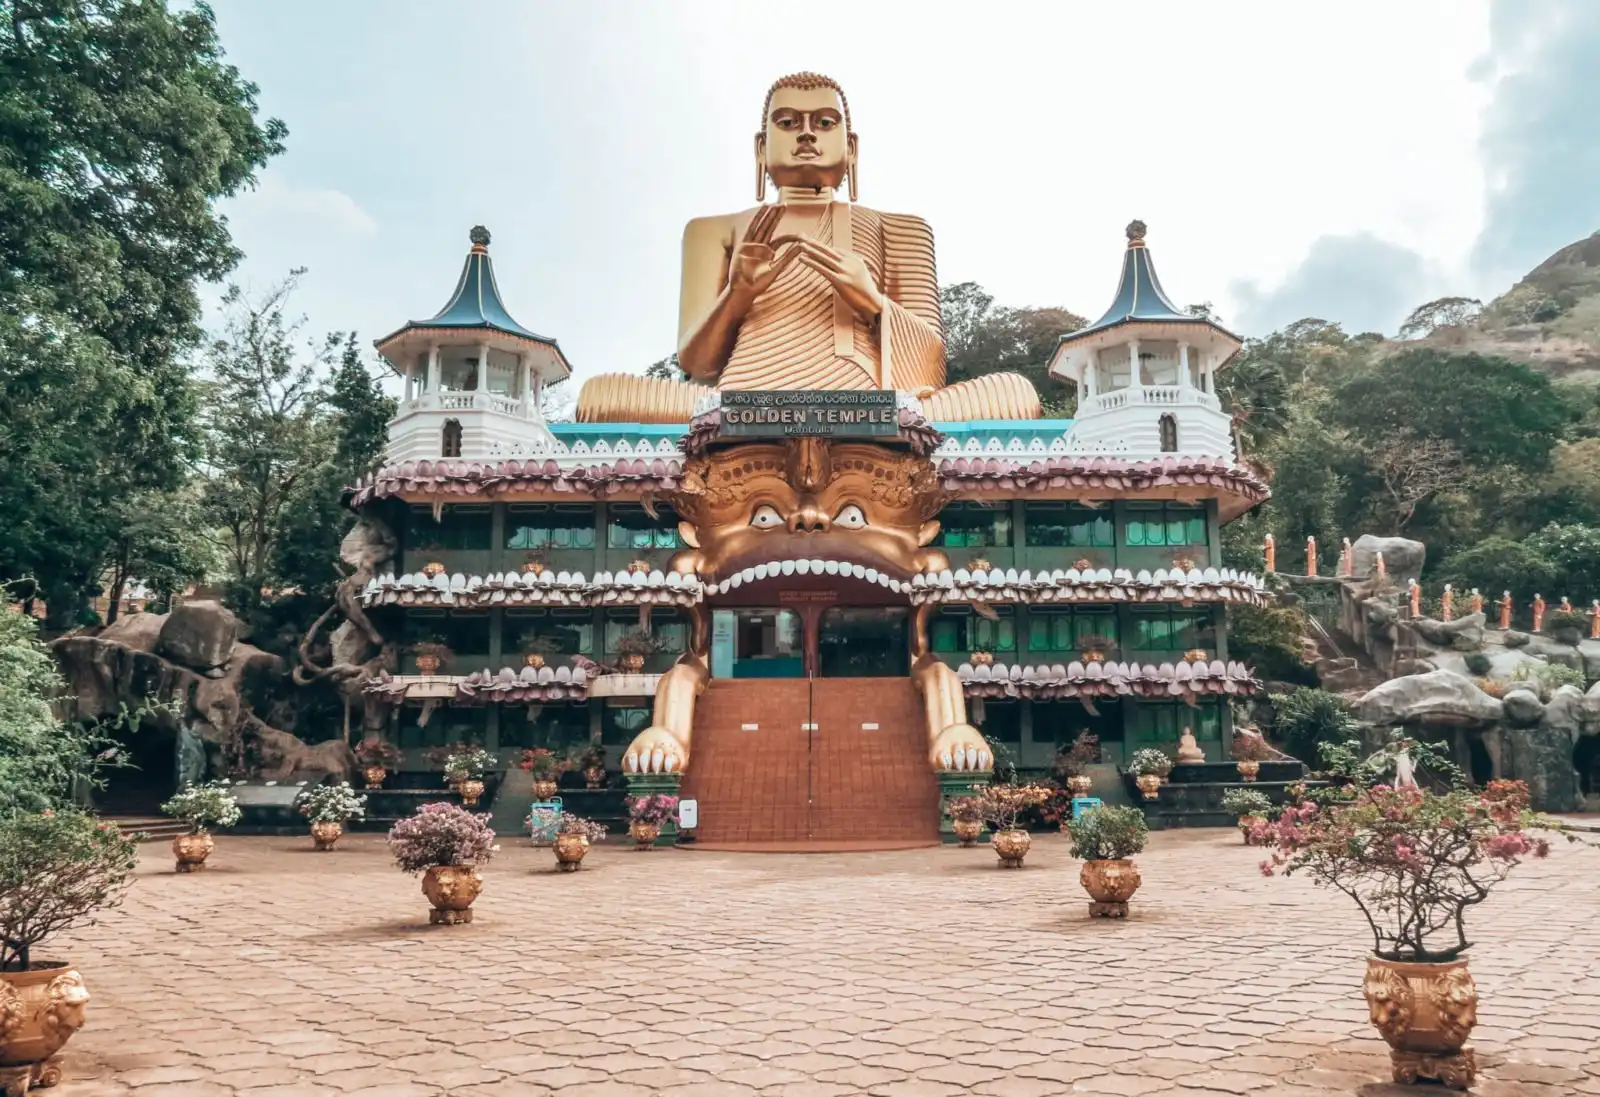 Giant Buddha statue outside the Dambulla Cave complex